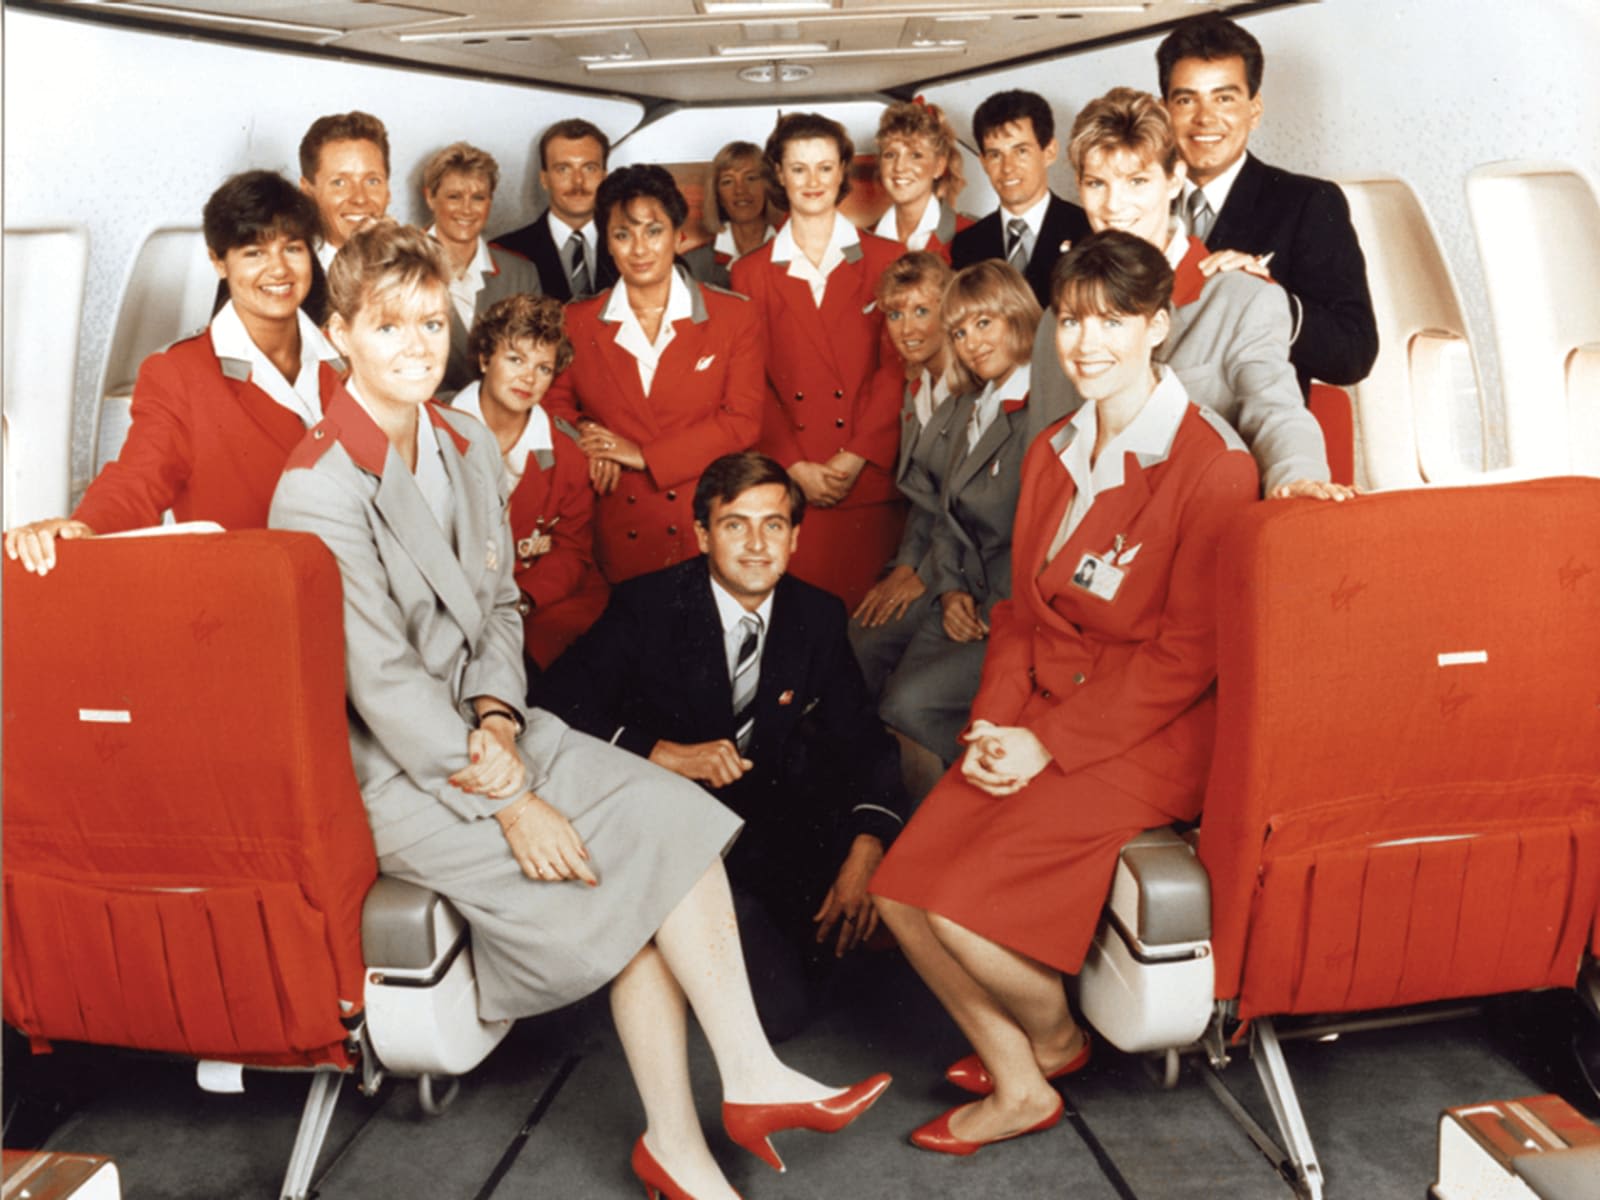 Virgin Atlantic cabin crew in the 1980s